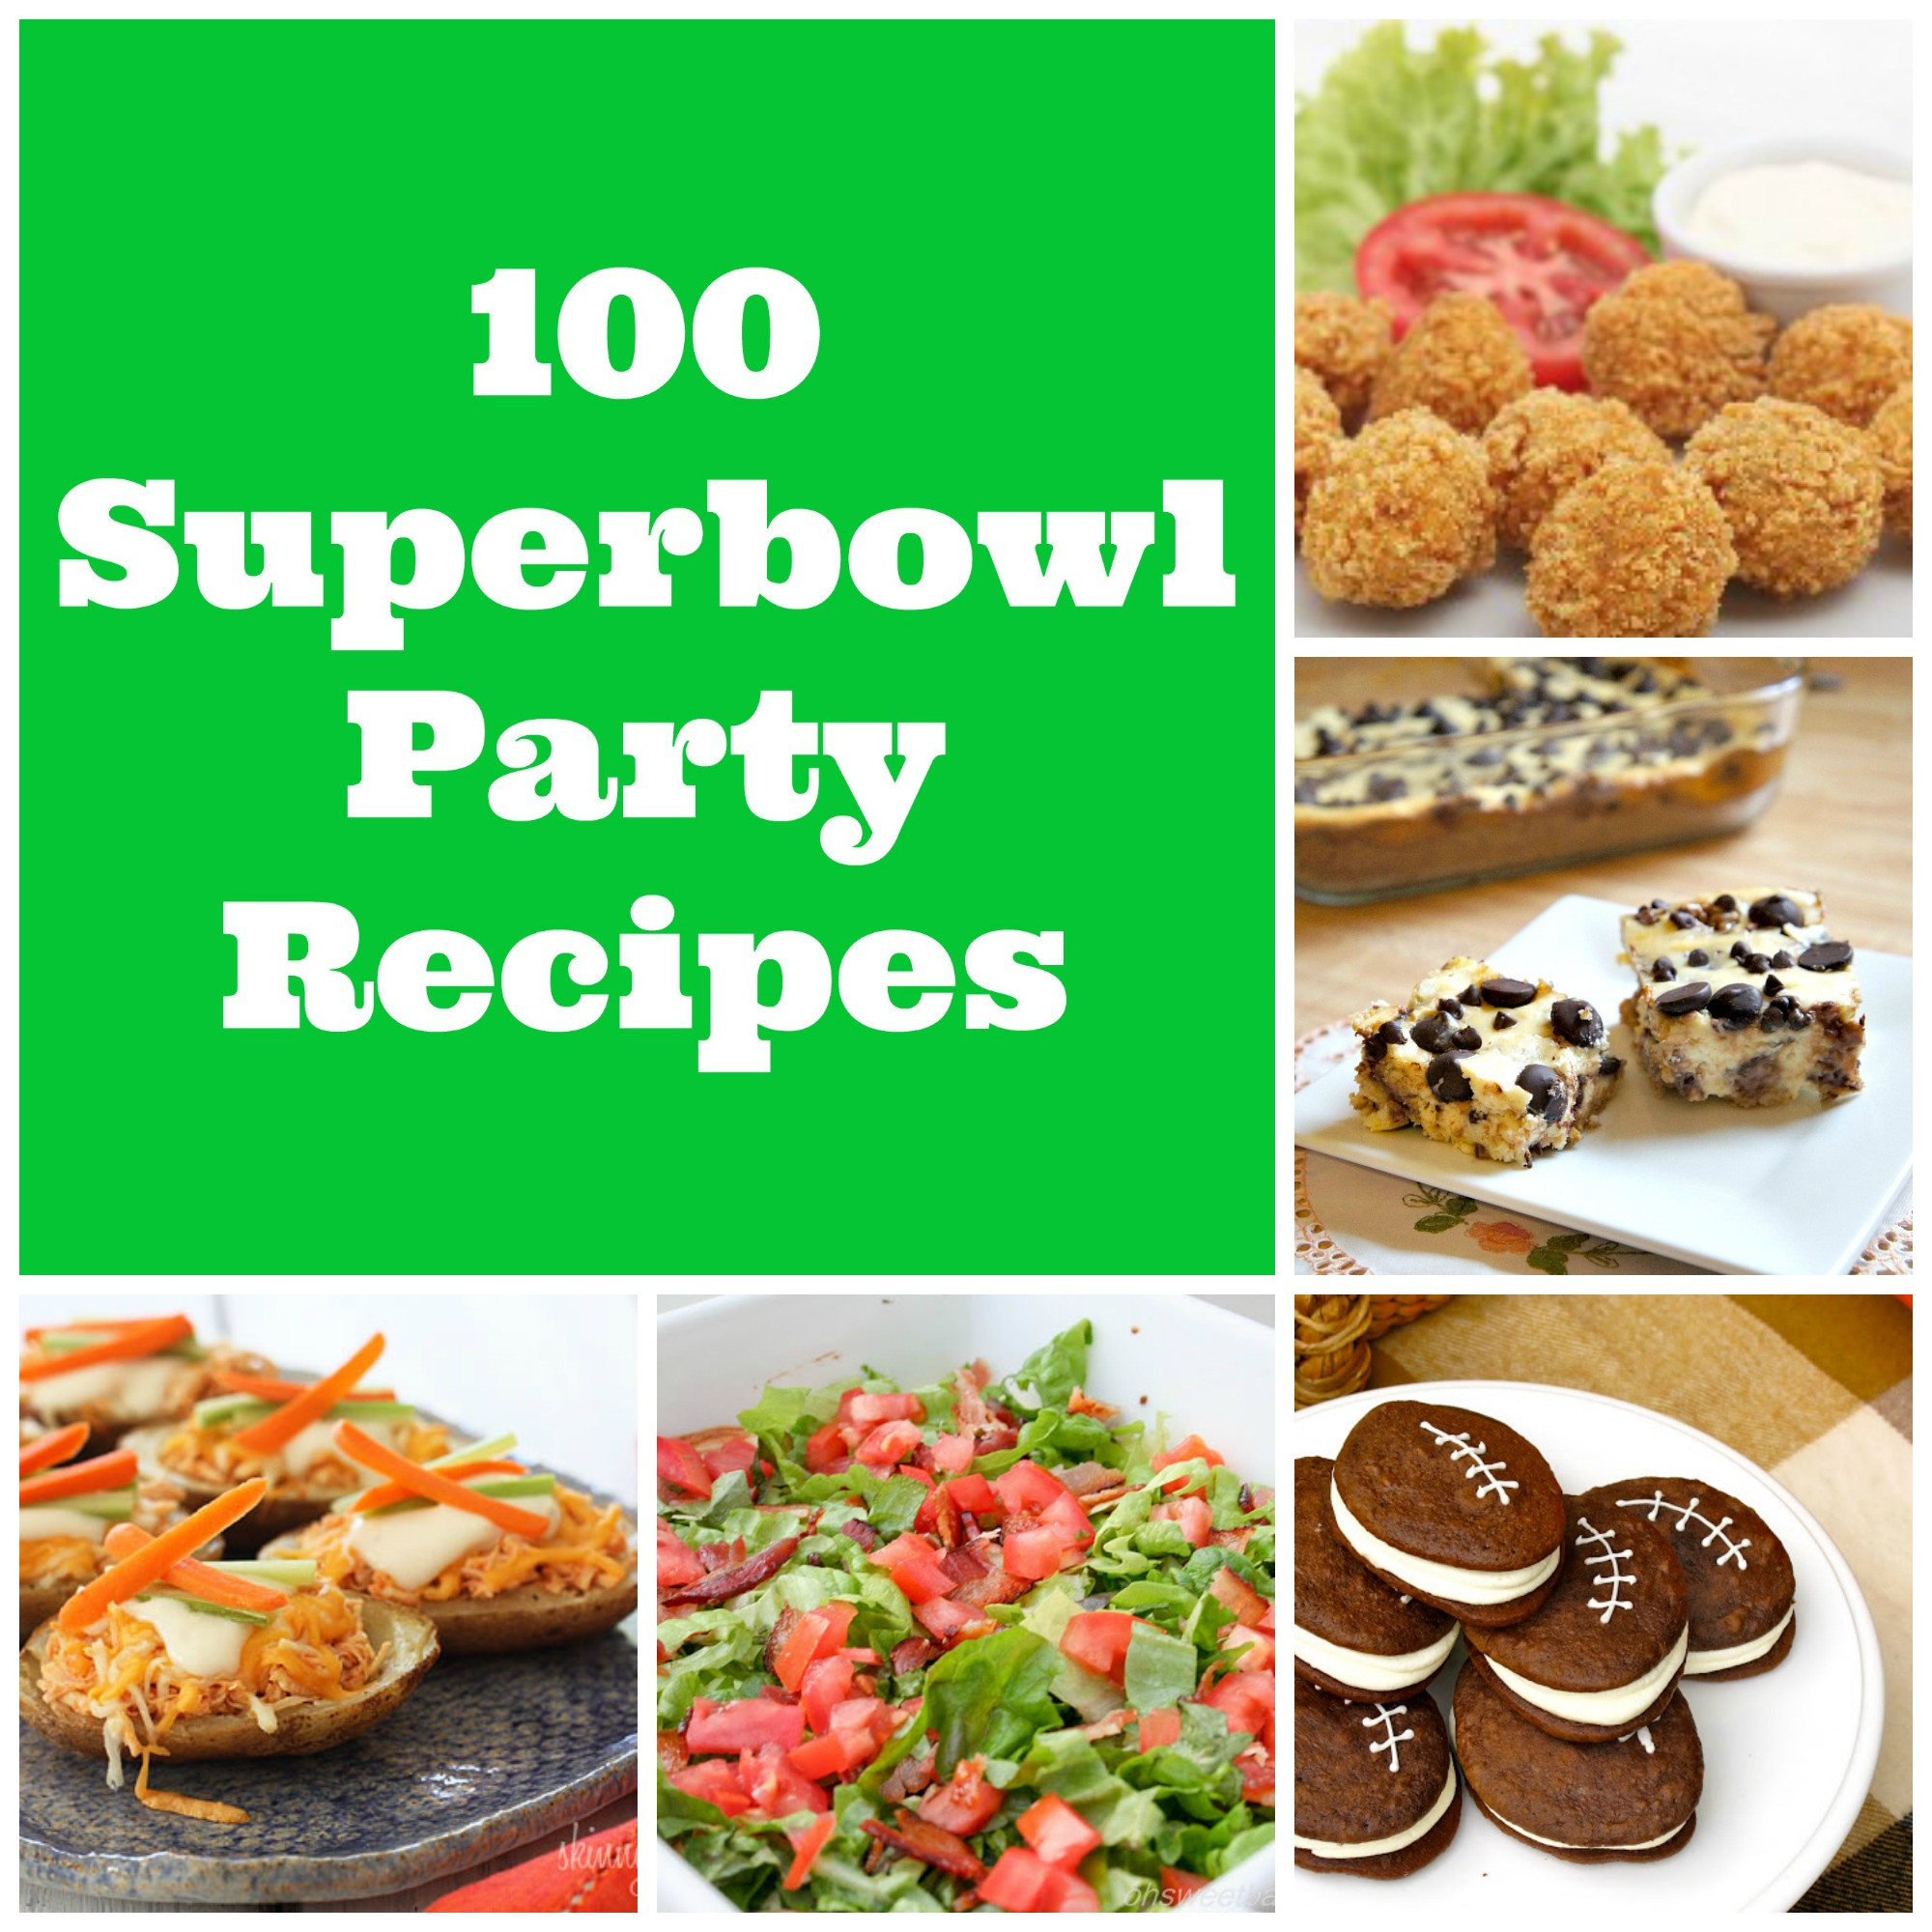 Super Bowl Recipes Pinterest
 100 Super Bowl Party Recipe Ideas My Suburban Kitchen